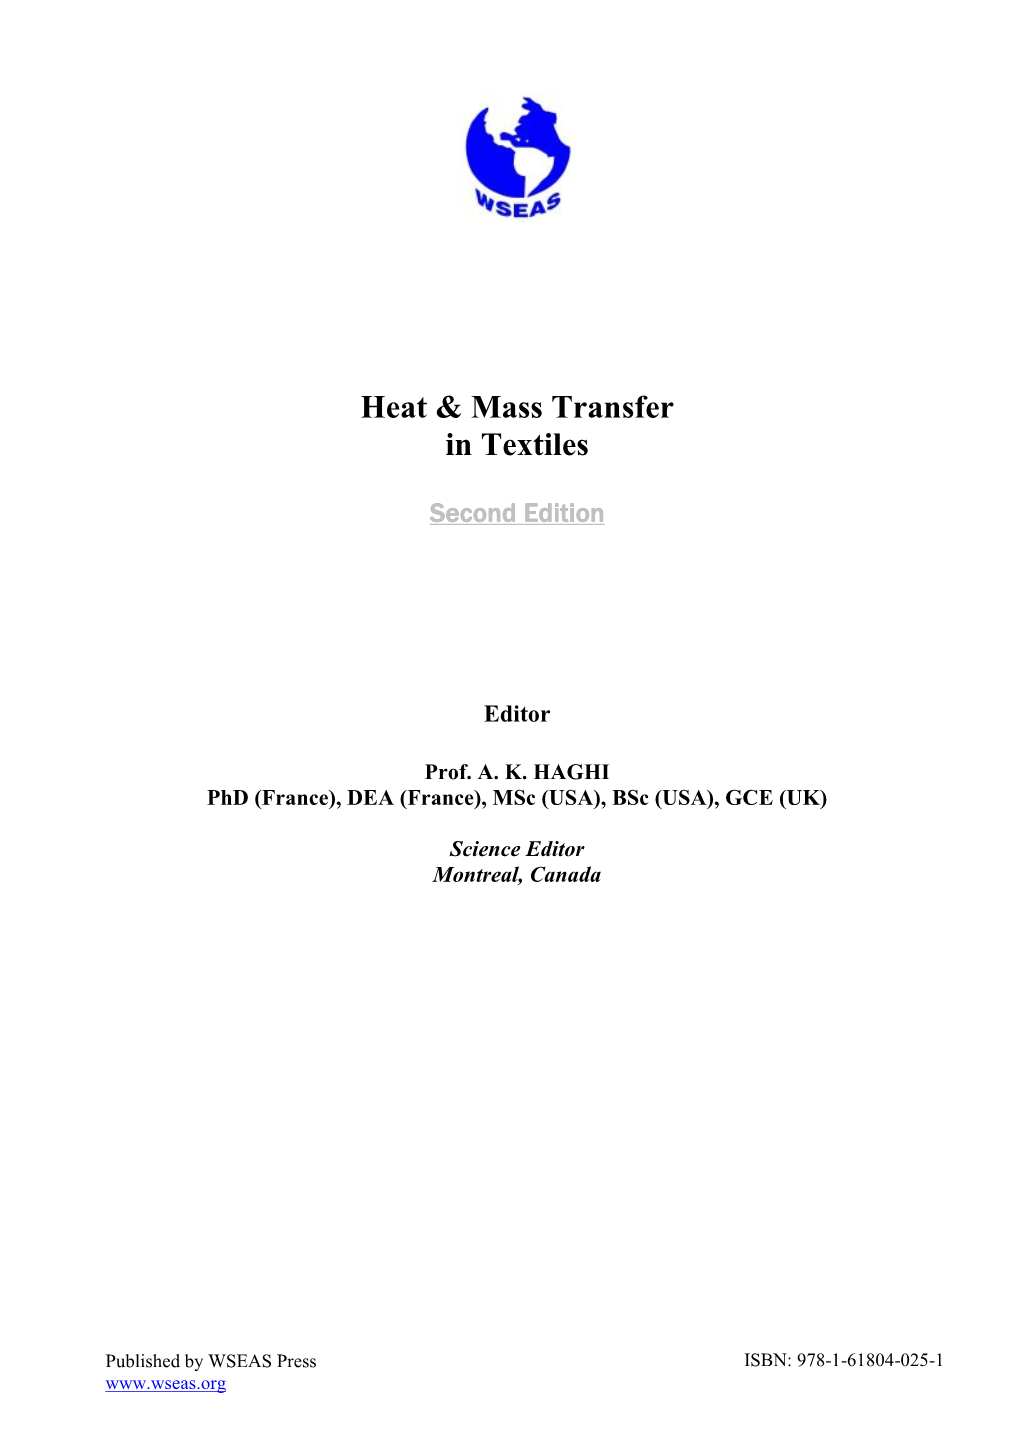 Heat & Mass Transfer in Textiles